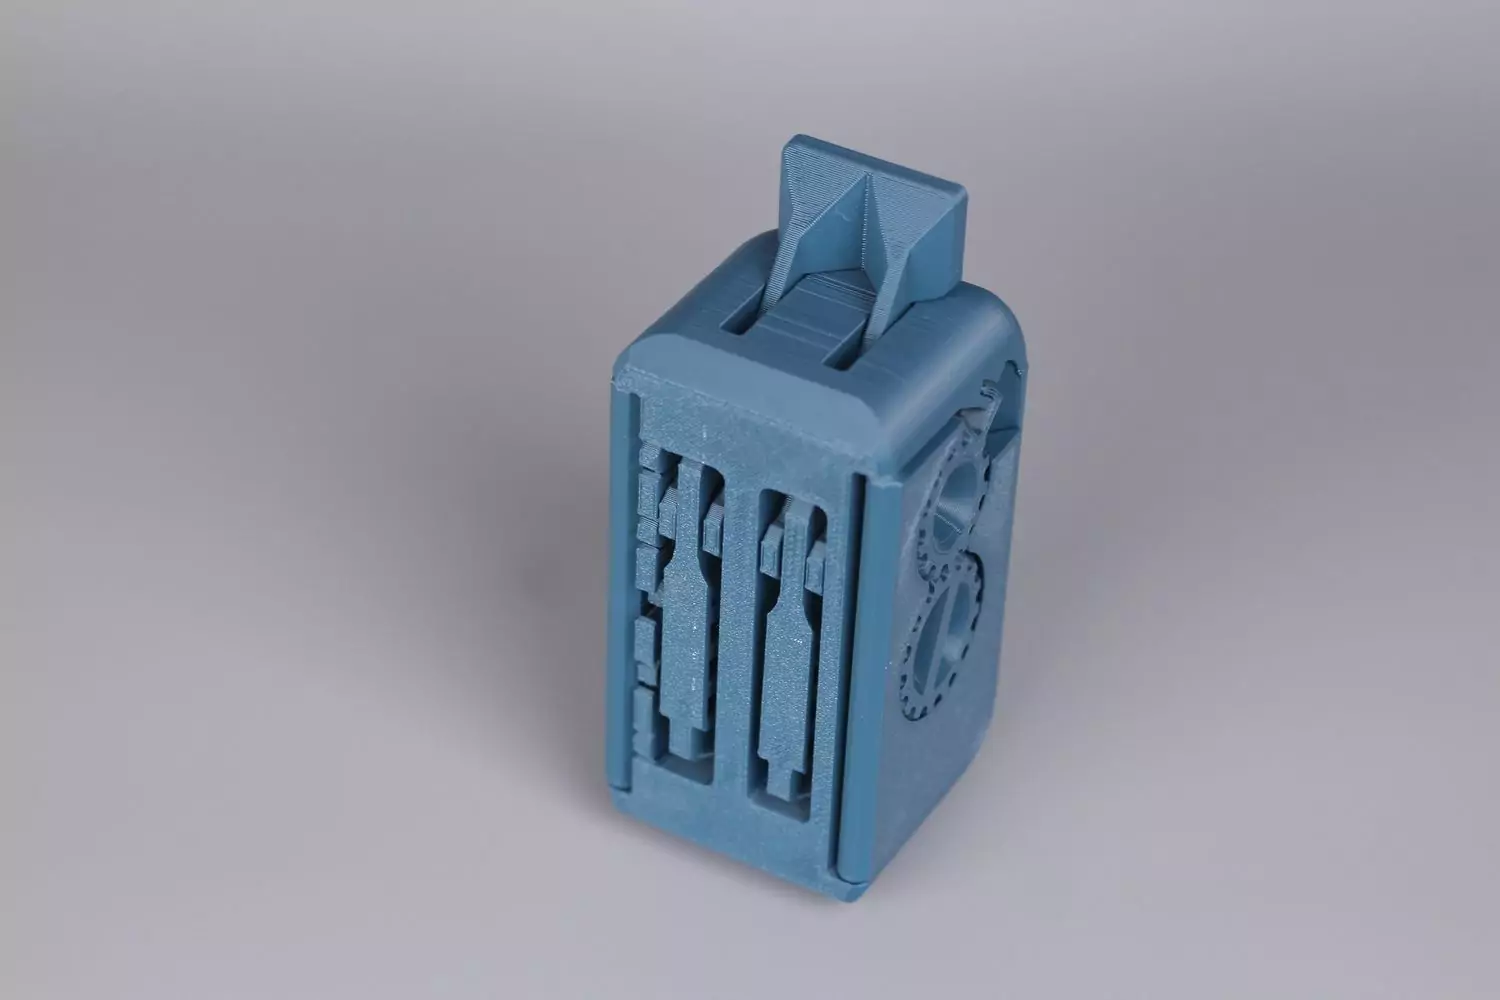 Torture Toaster calibration test on BIQU Hurakan6 | BIQU Hurakan Review: Klipper Firmware on a Budget